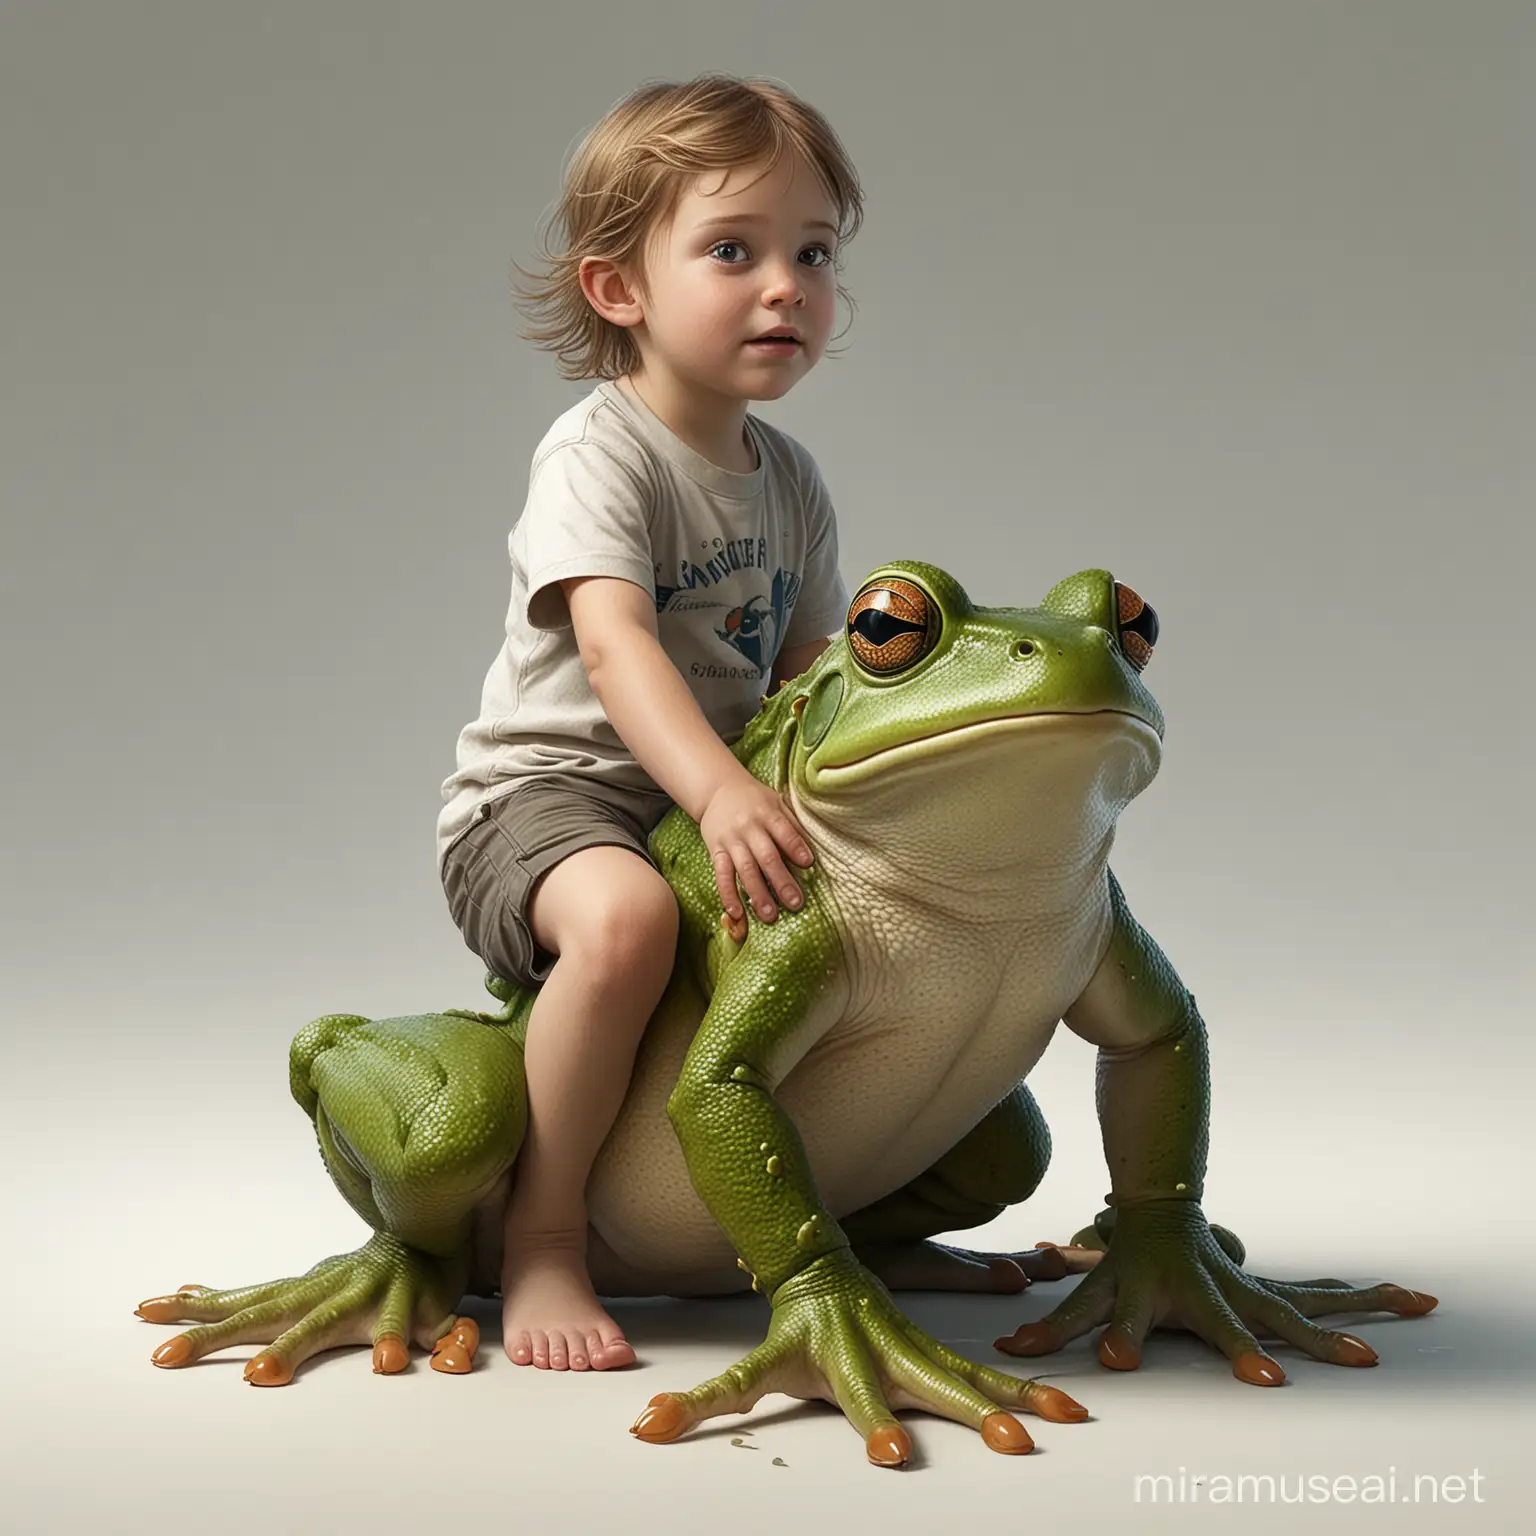 Inventive Cartoonish Child Riding Frog in Detailed Digital Art